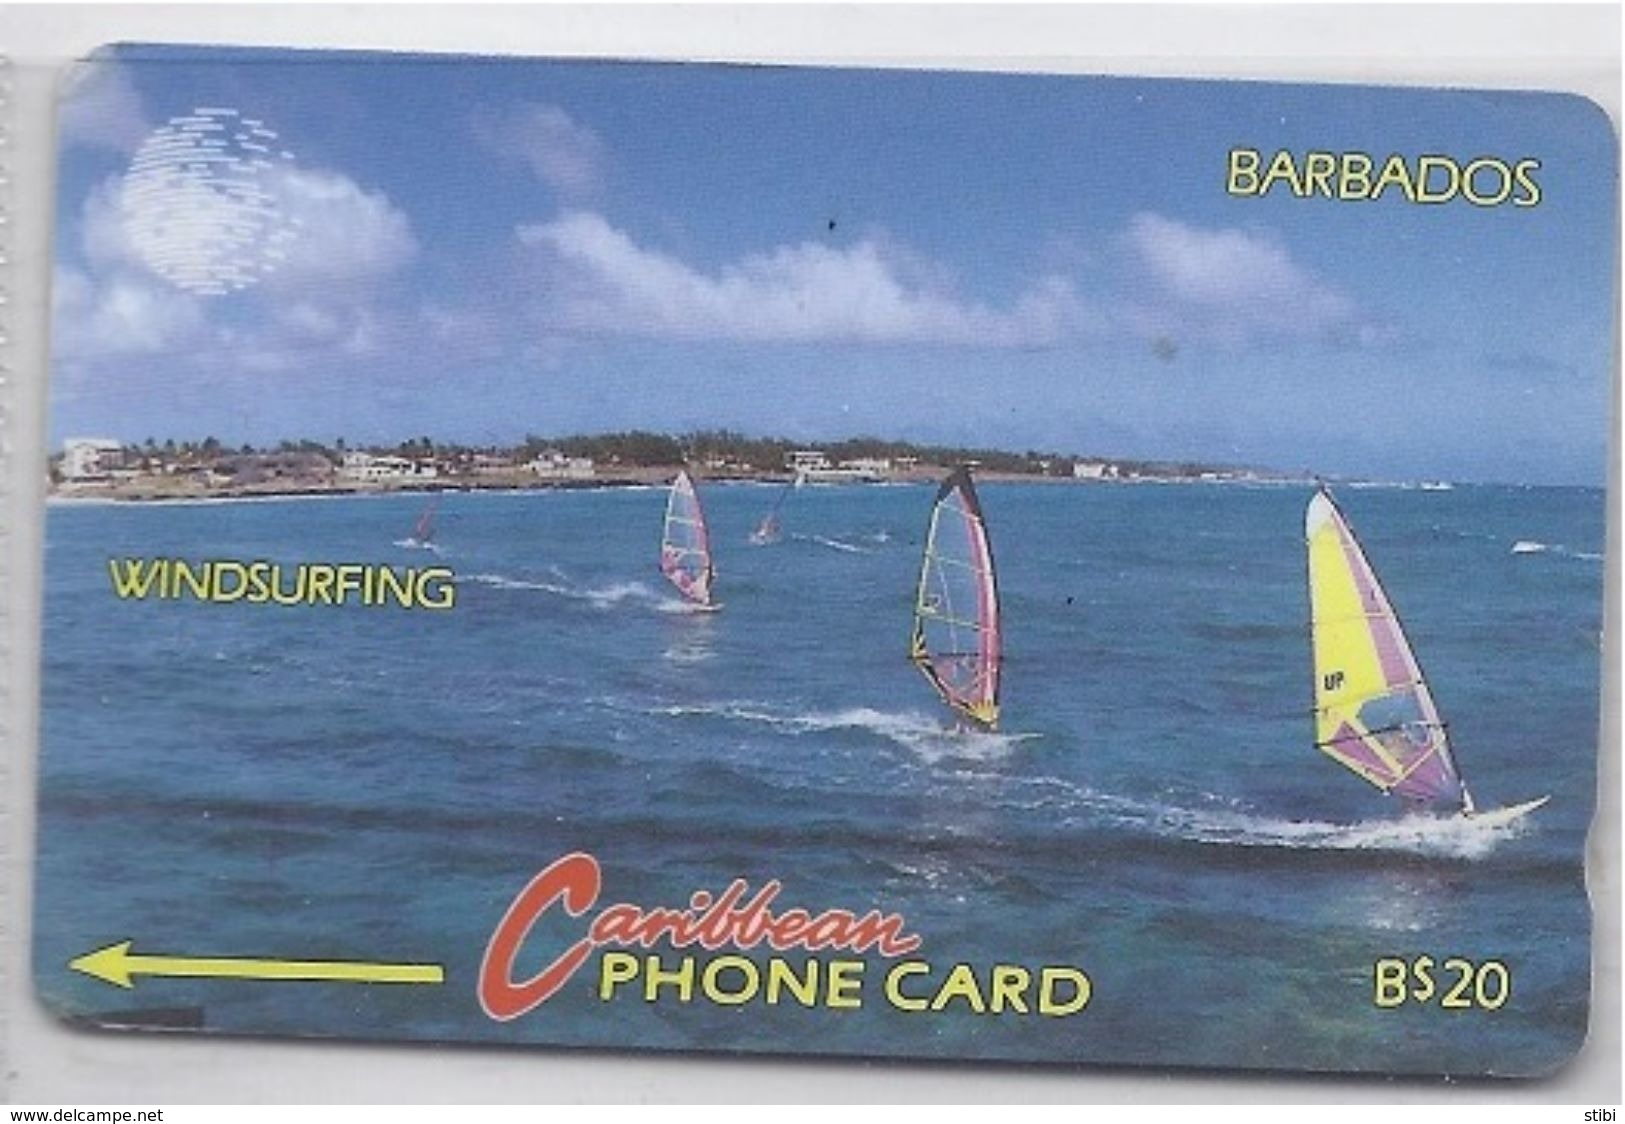 BARBADOS - WINDSURFING - 12CBDB - Barbados (Barbuda)